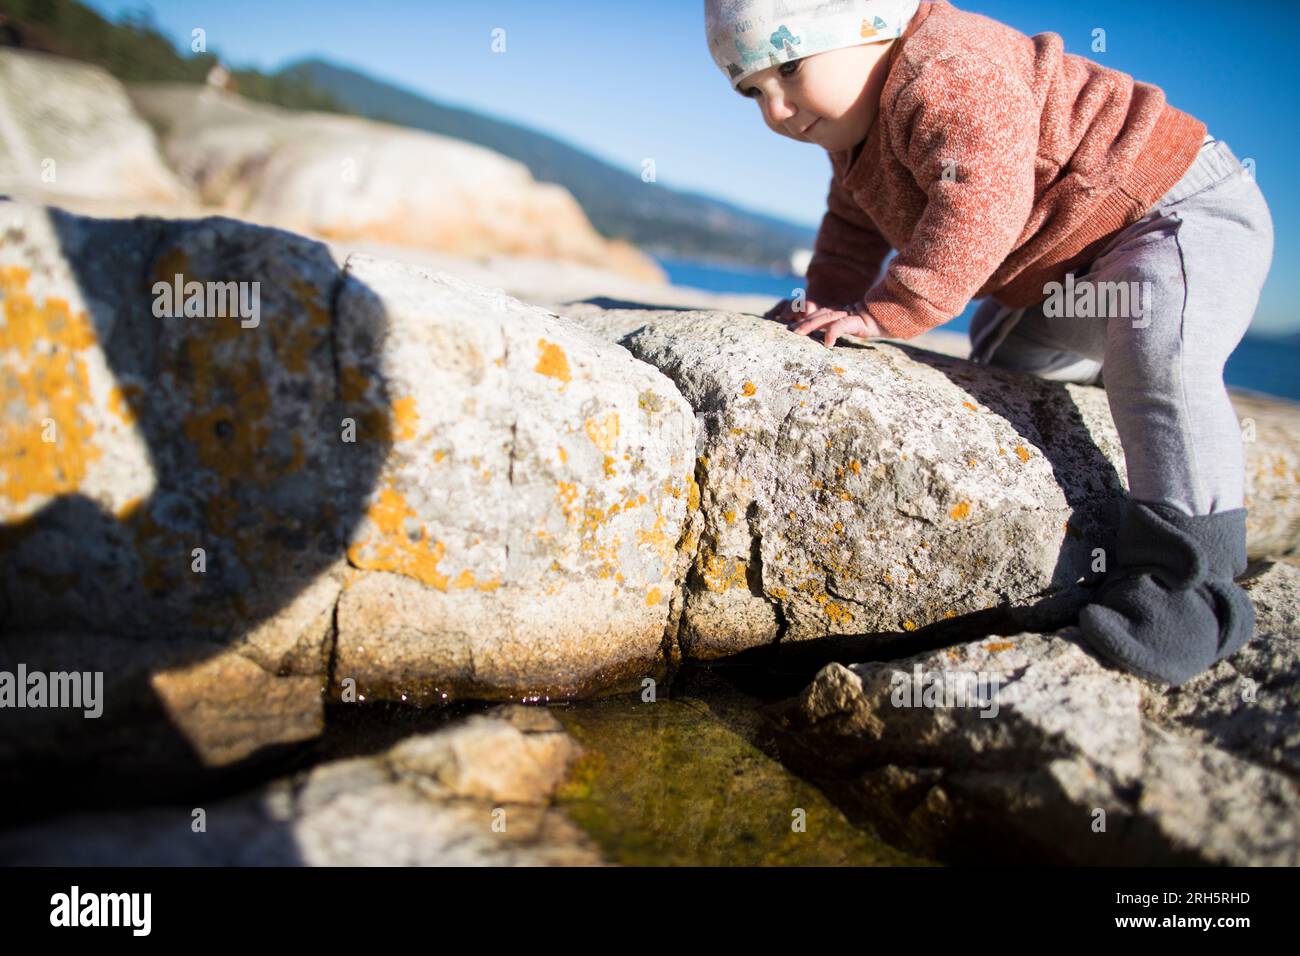 Baby climbing up rocks outdoors at the beach. Stock Photo